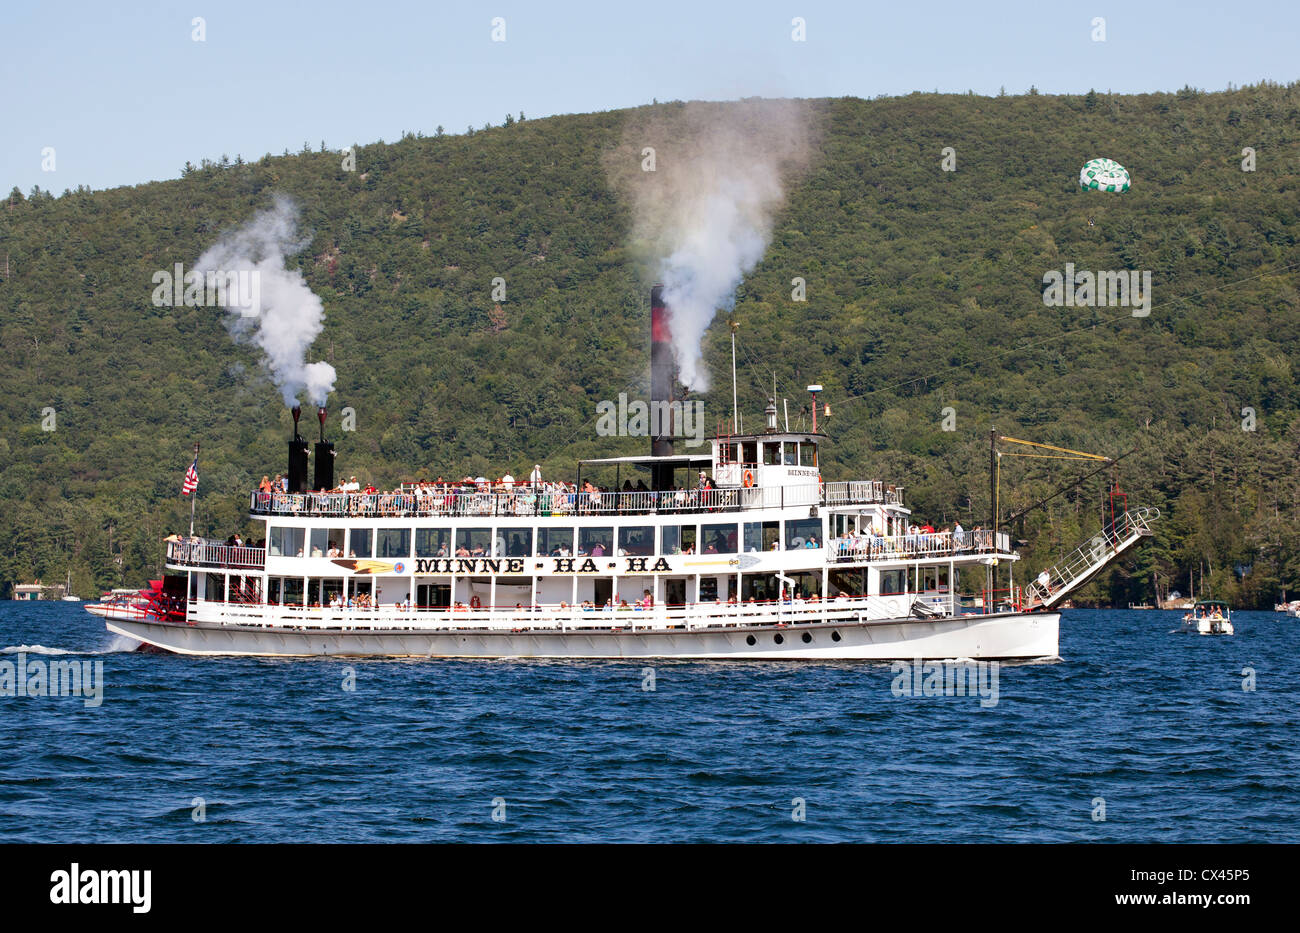 Minne-Ha-Ha steam powered stern wheel excursion cruise ship United States America Adirondack State Park Lake George New York Stock Photo